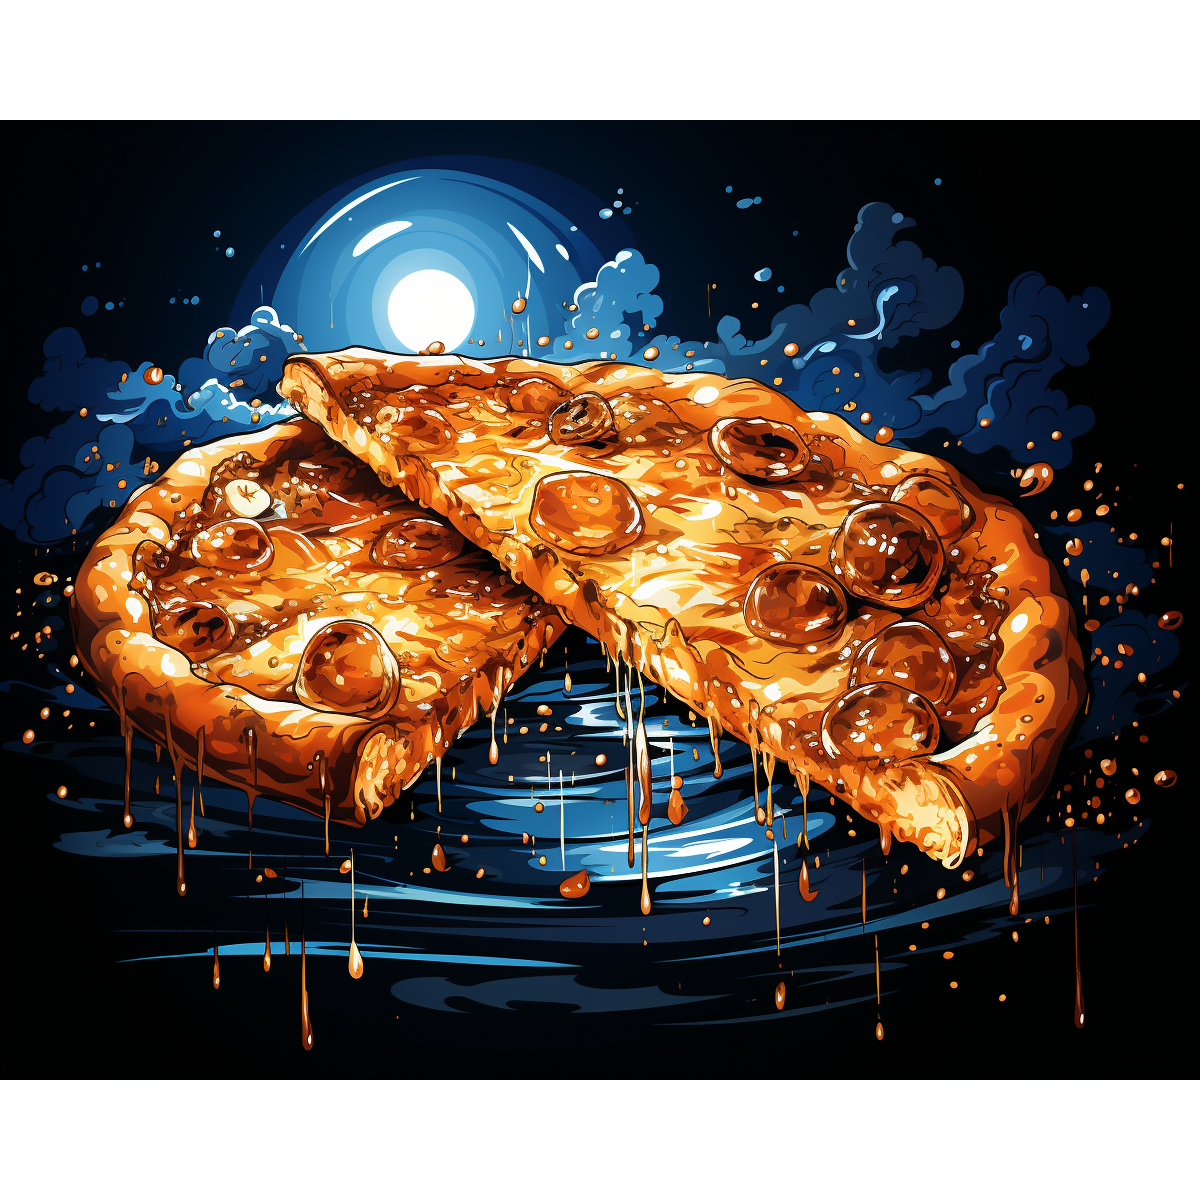 Moon Pizza